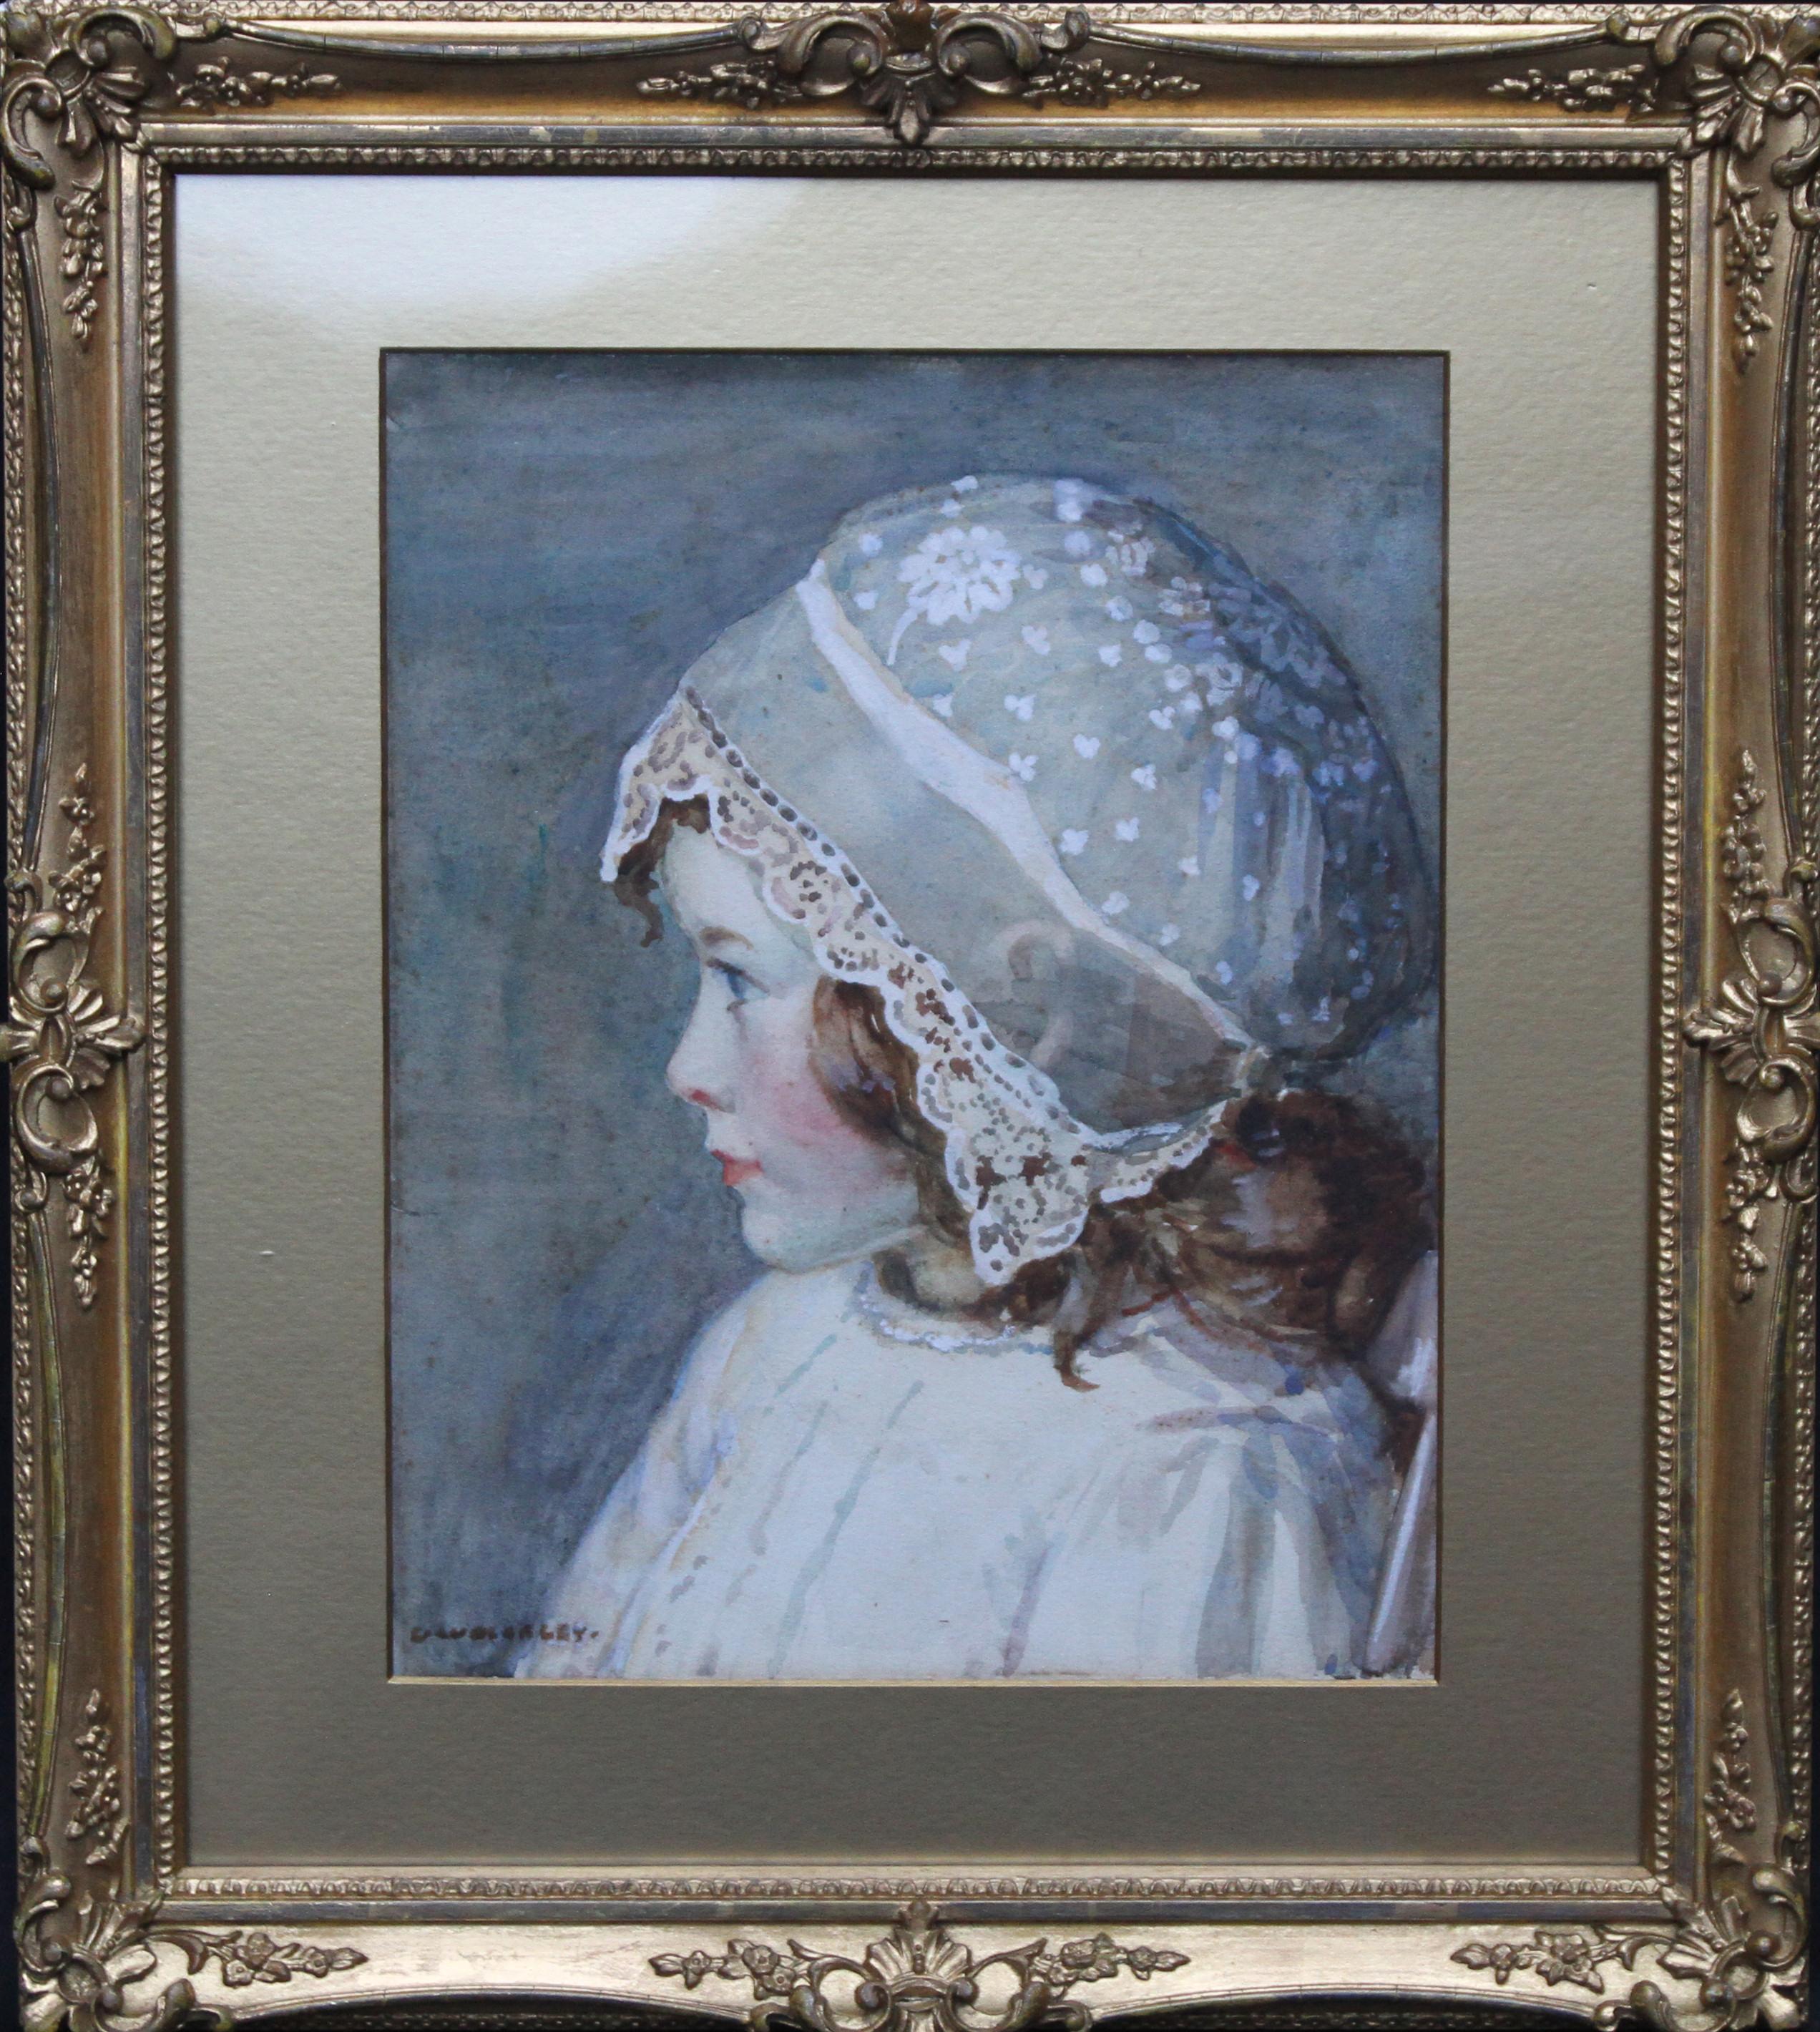 Portrait of a Girl in a Lace Bonnet -British art Edwardian Newlyn School exhibit 2